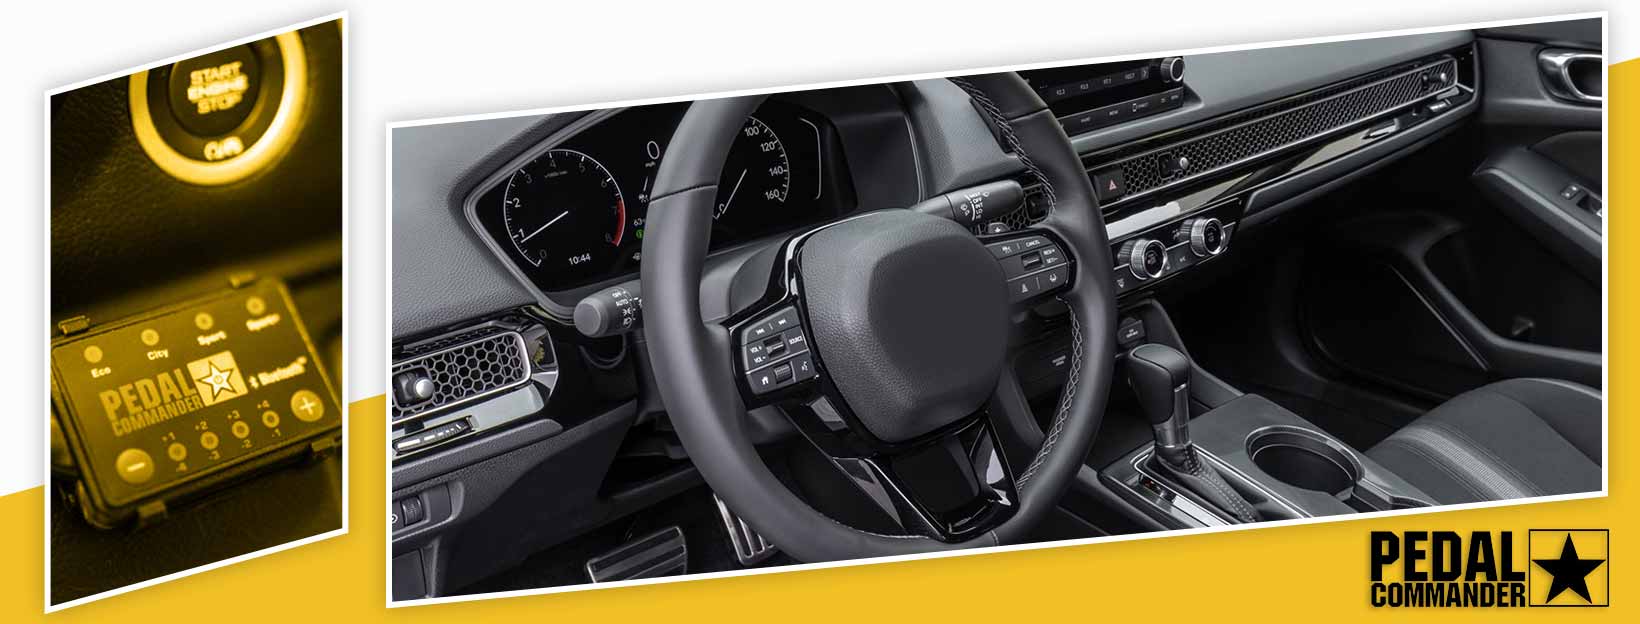 Pedal Commander for Honda Civic - interior